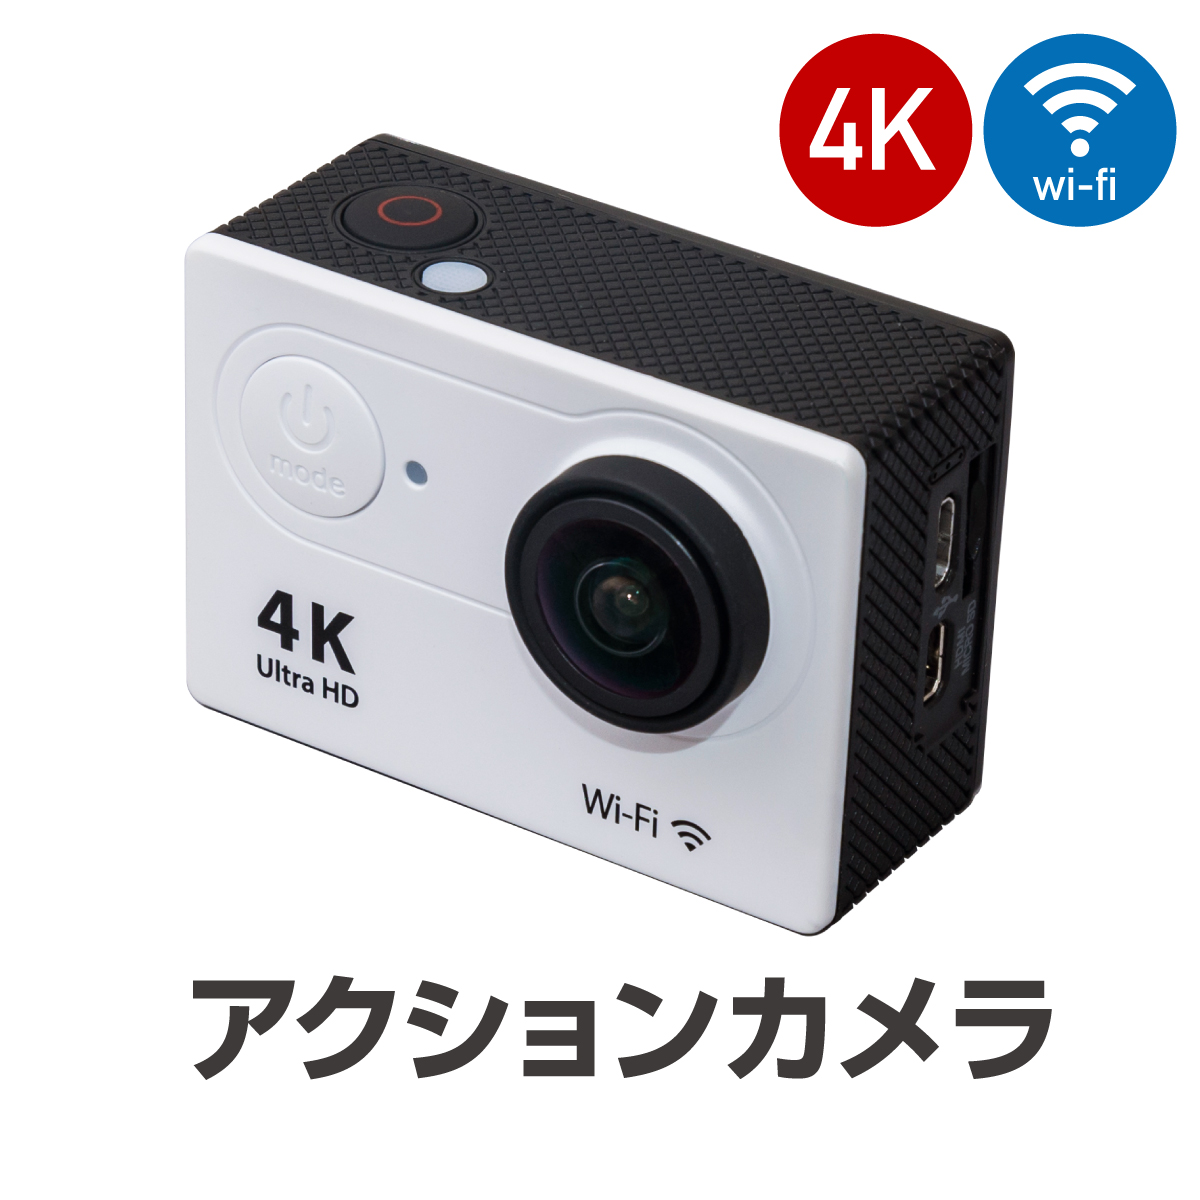 Action Camera 4k Ultra Hd Wifi Manual Espanol